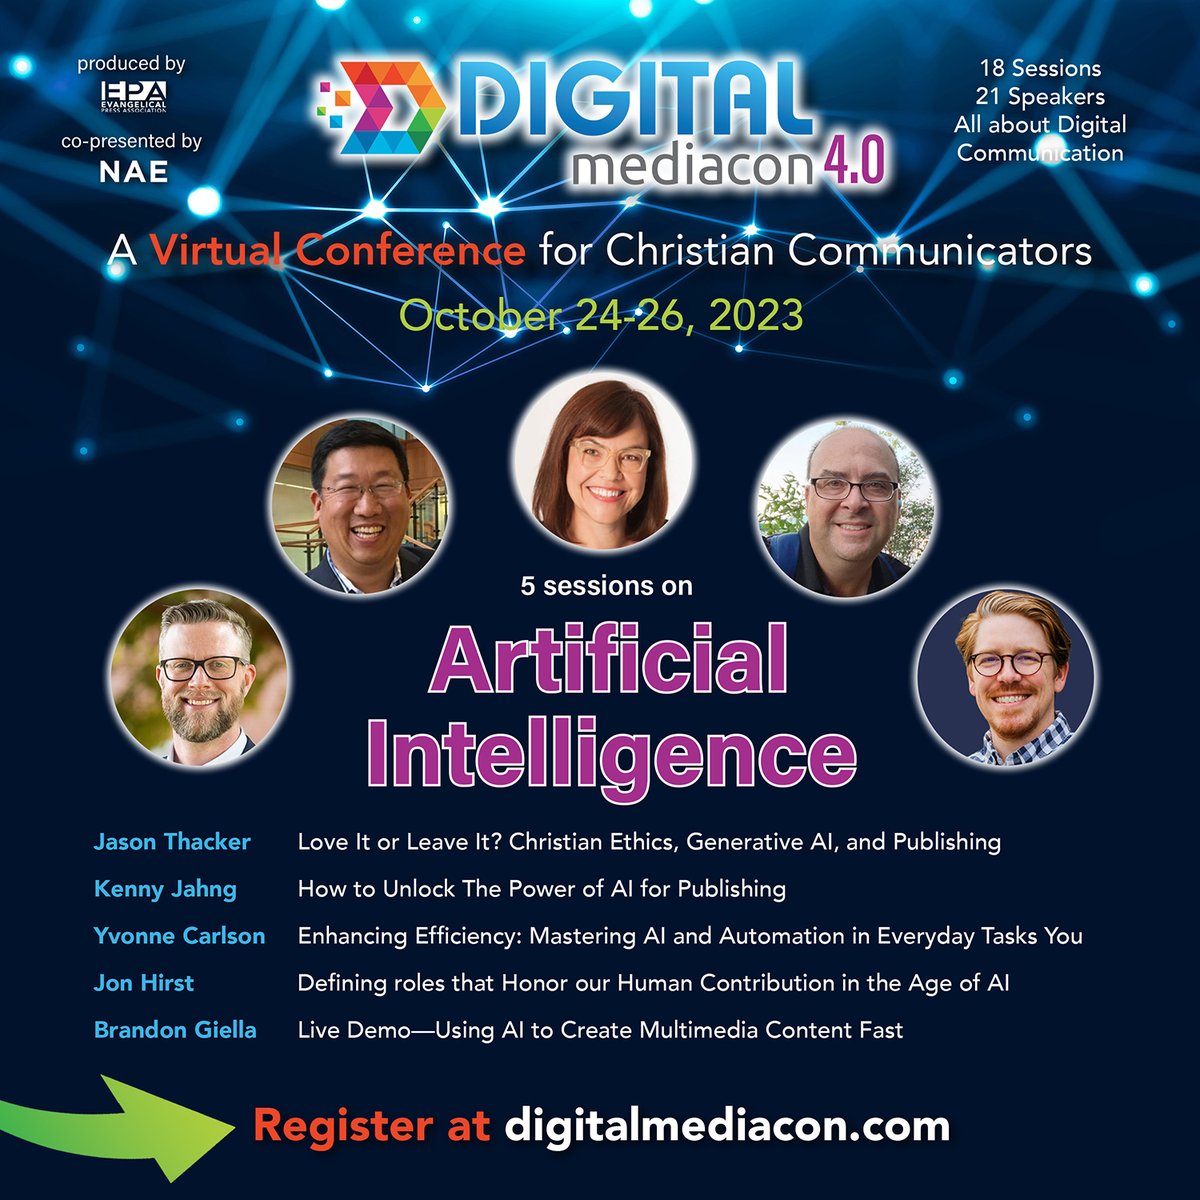 5 sessions on AI. Featuring Jason Thacker, Kenny Jahng, Yvonne Carlson, Jon Hirst, Brandon Giella. Register at digitalmediacon.com.